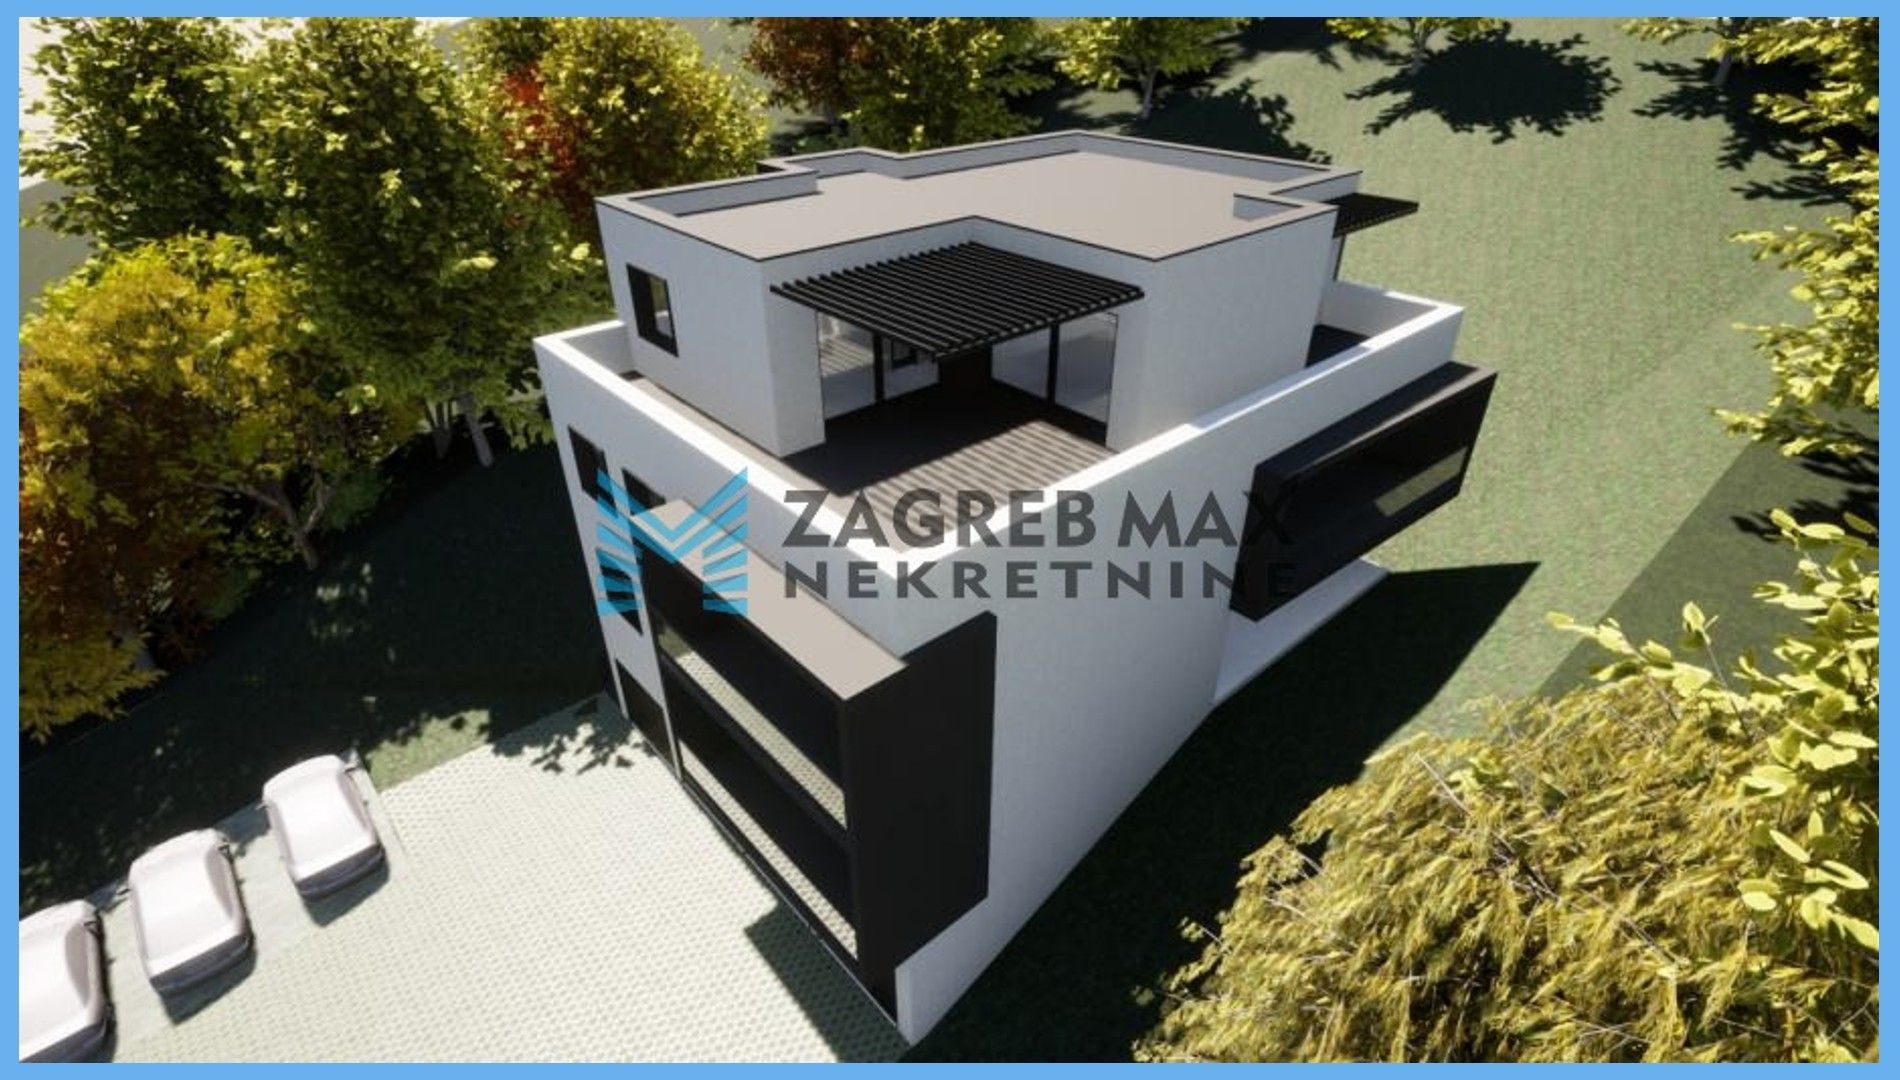 Zagreb - ZELENGAJ - Kraljevec, građevinsko zemljište od 1663 m2 na mirnoj lokaciji